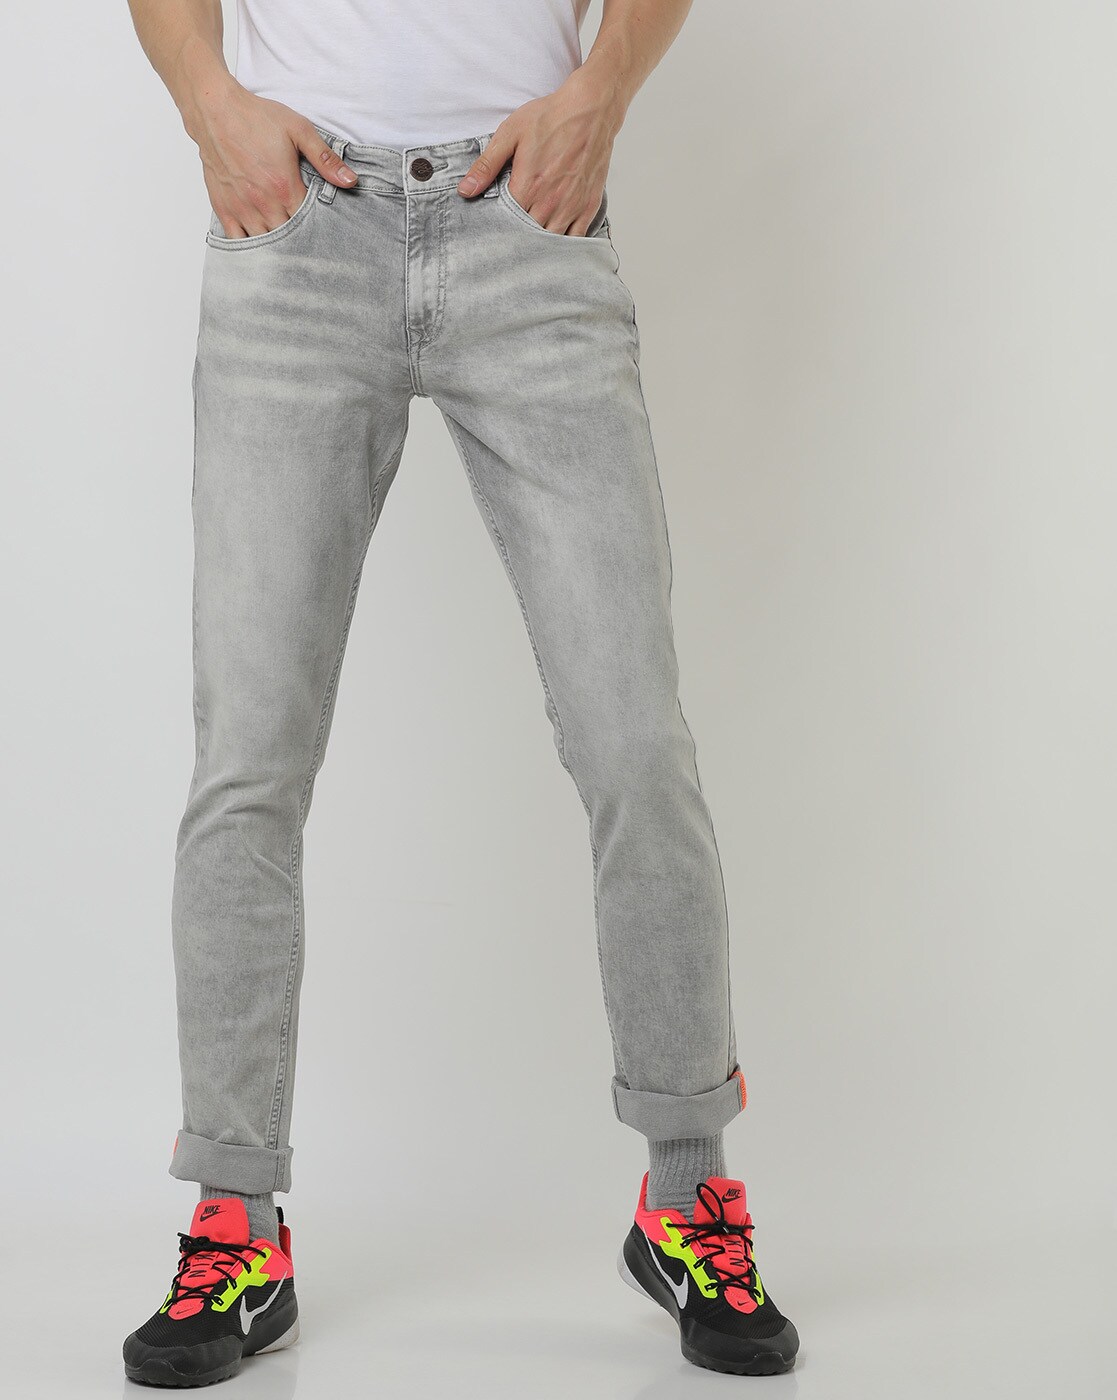 light grey denim jeans